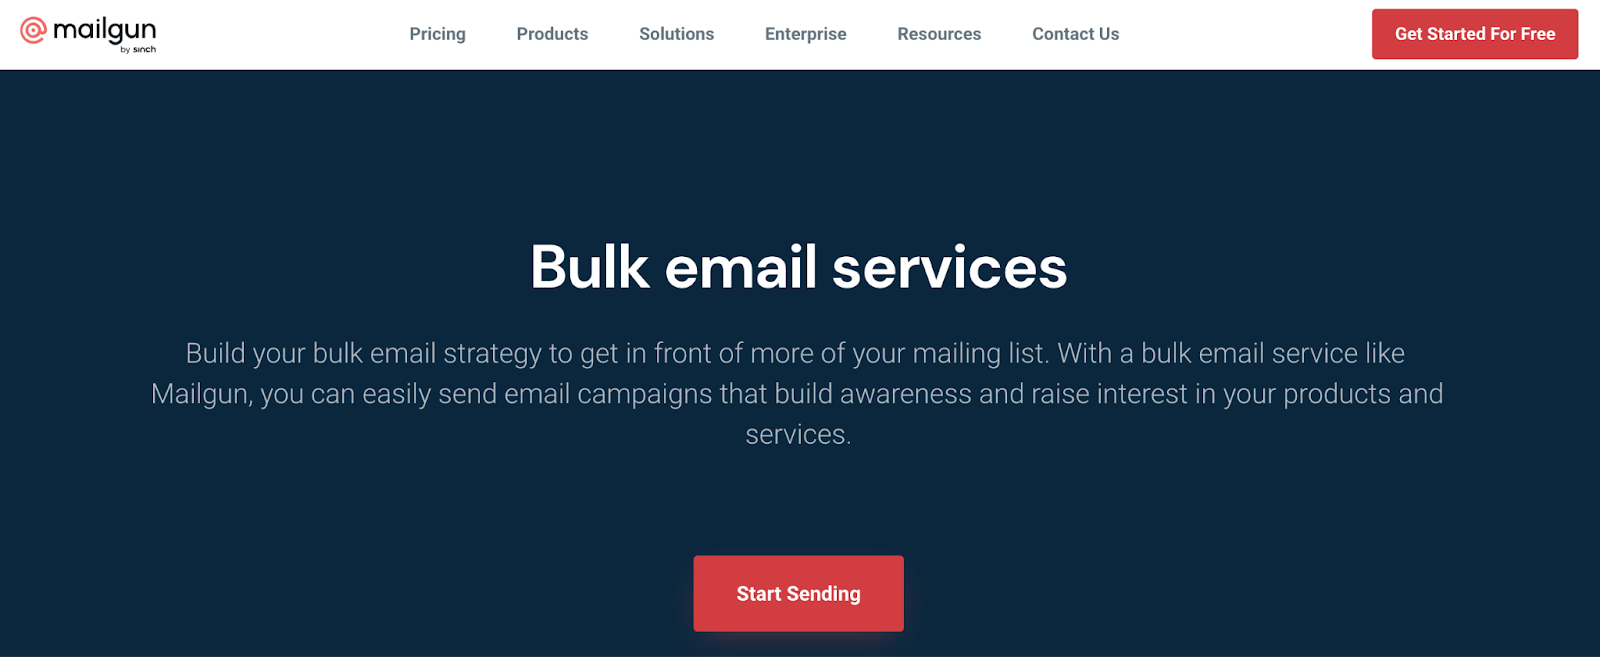 Mailgun bulk email services 